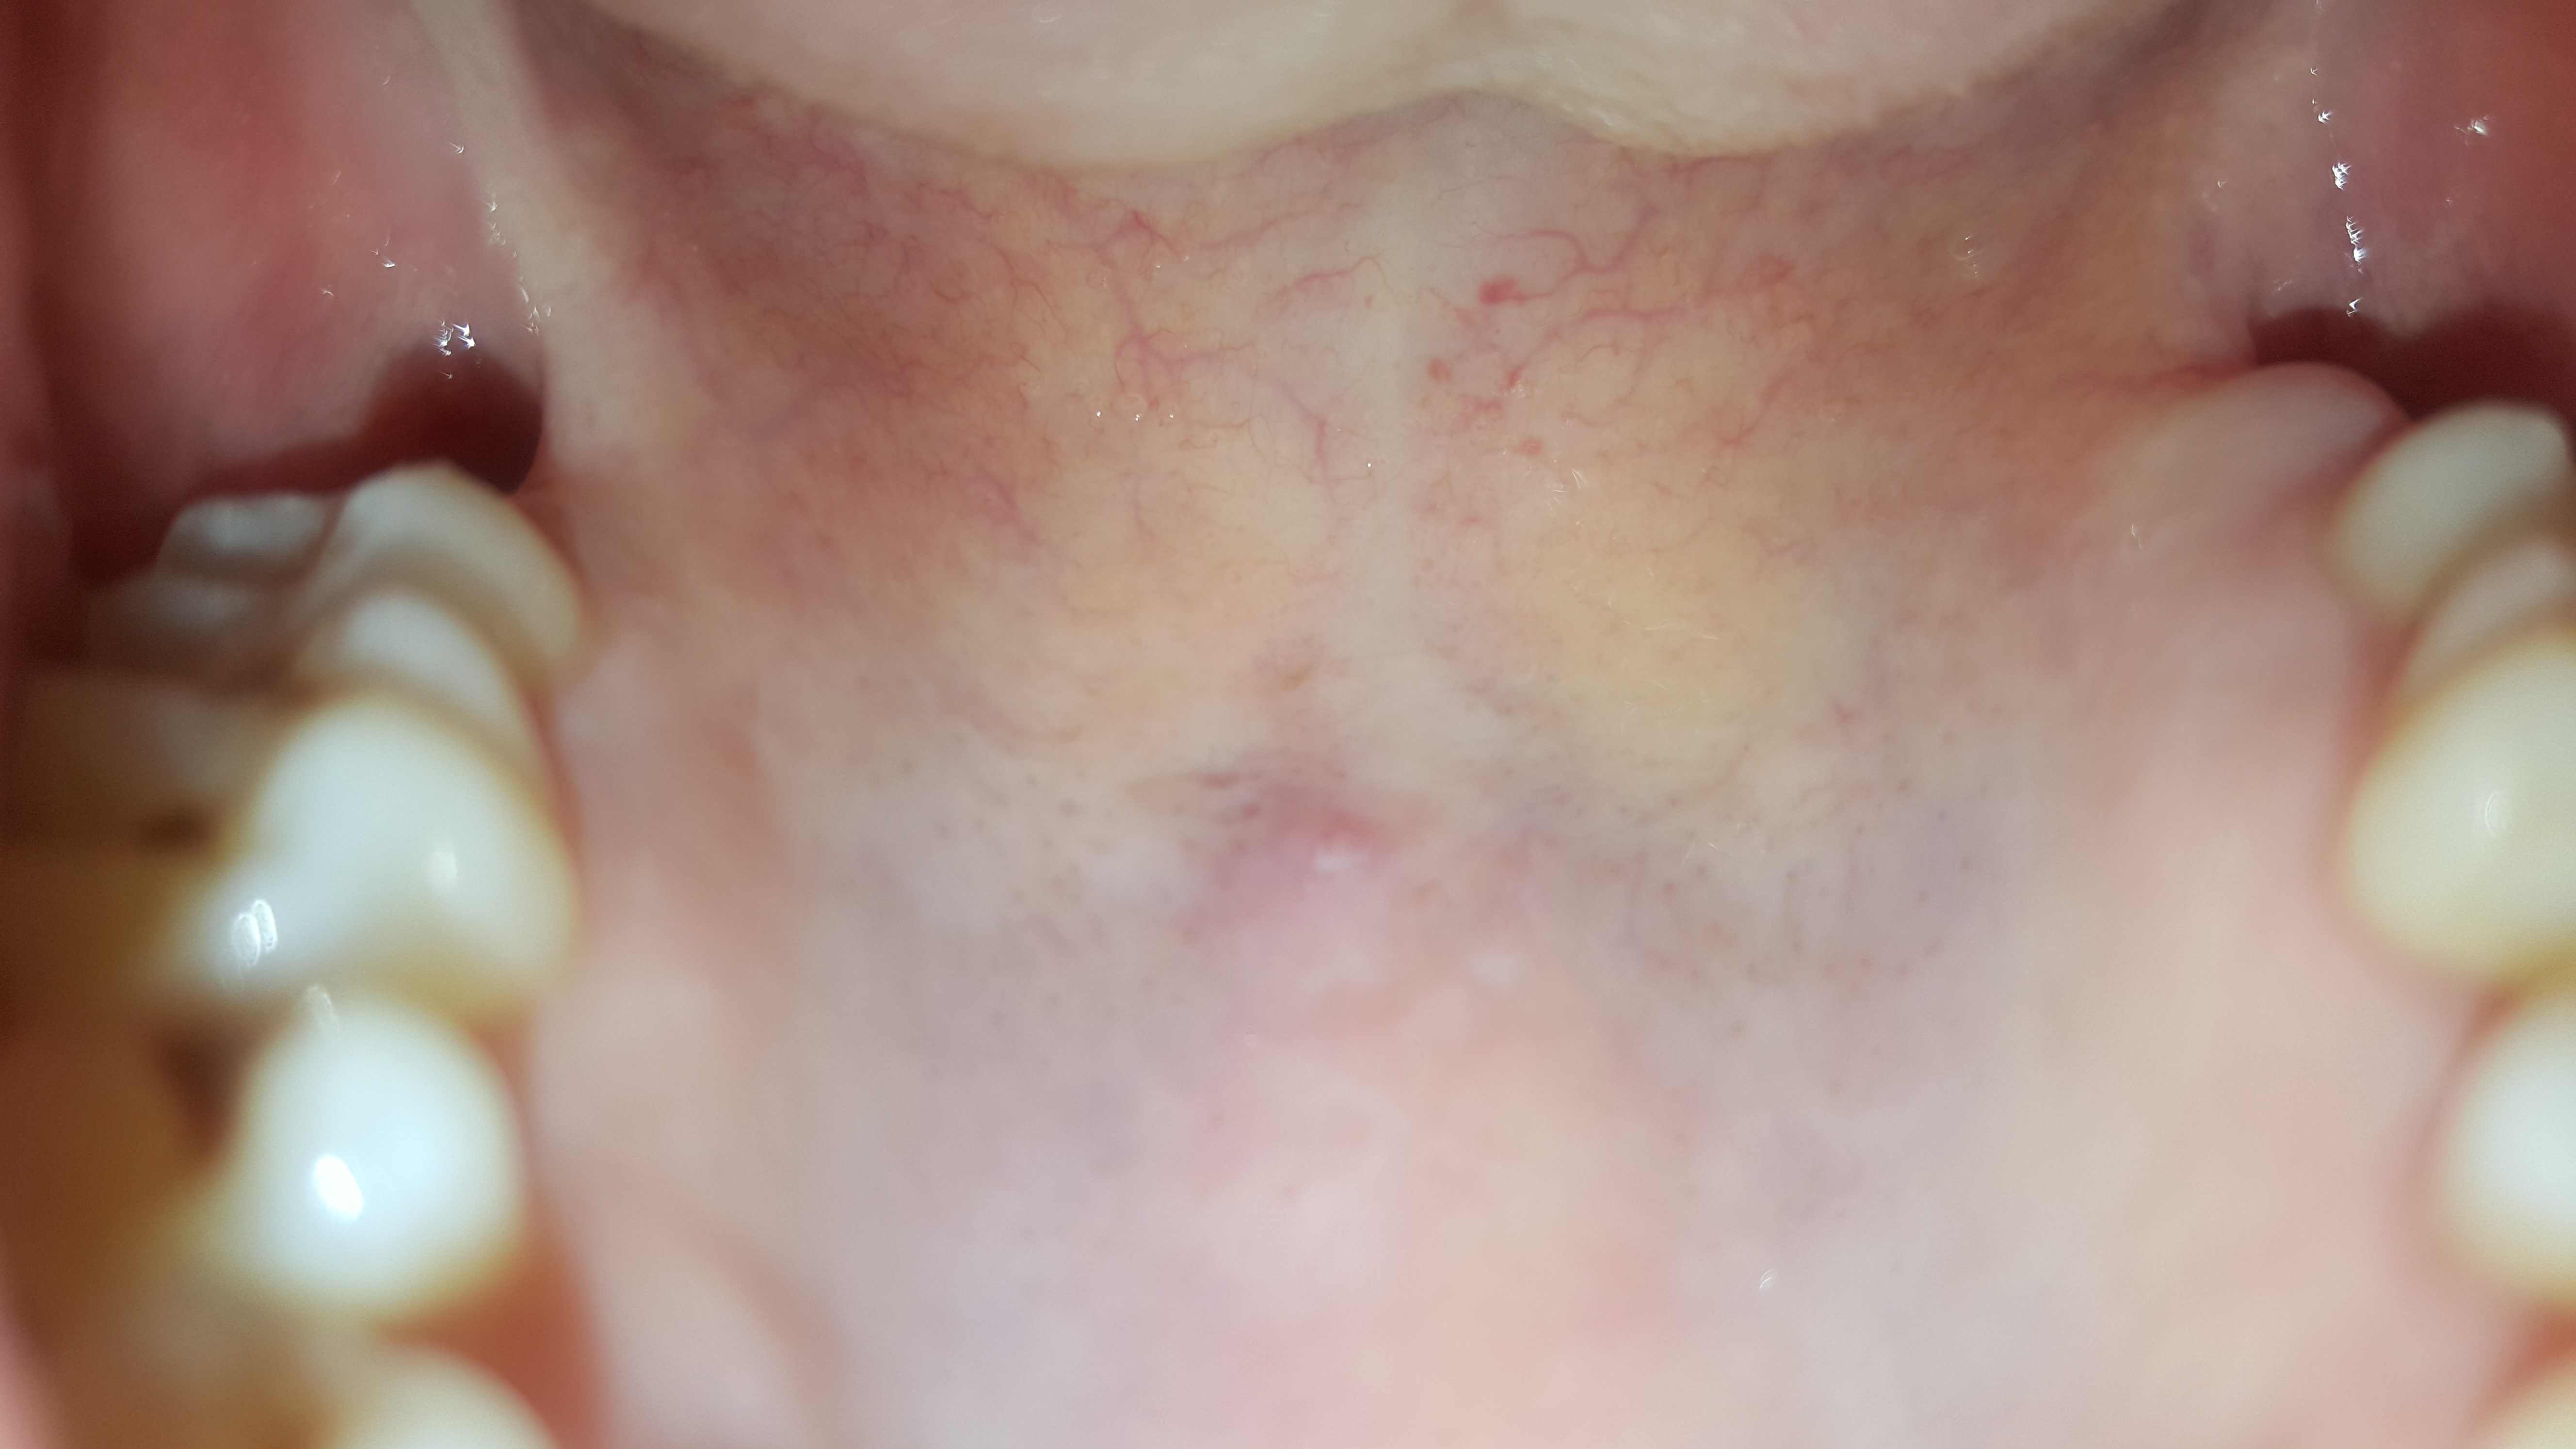 Papilloma virus palato, Throat cancer from hpv symptoms